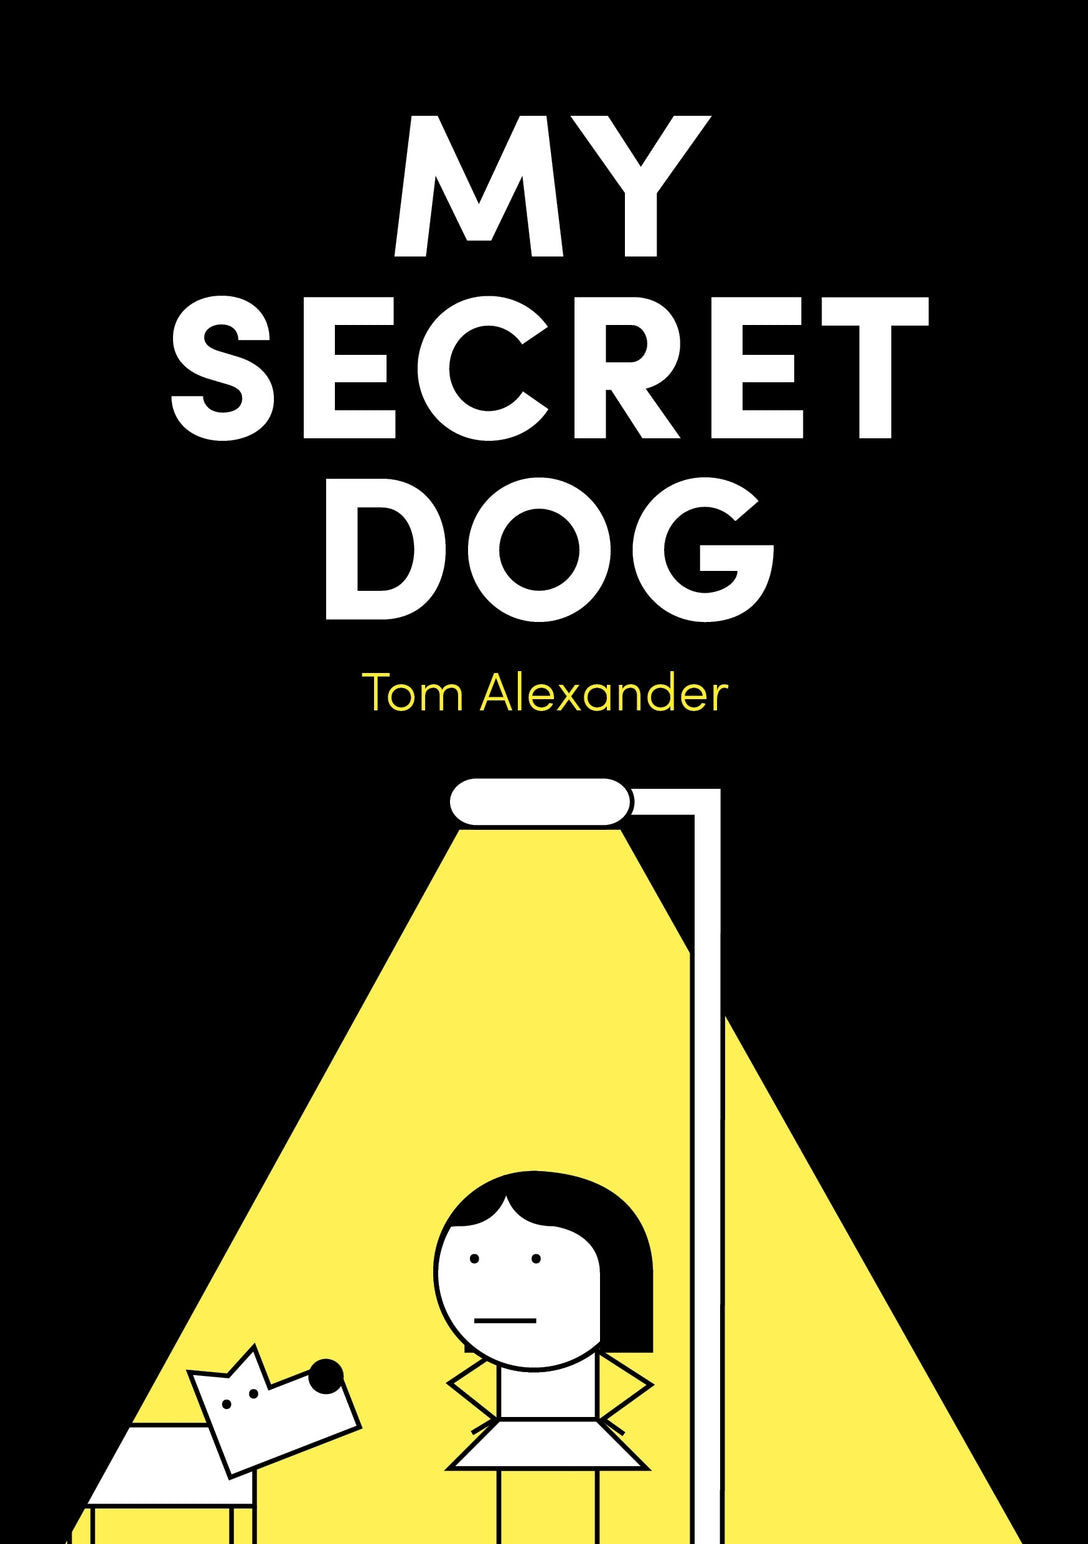 My Secret Dog by Tom Alexander